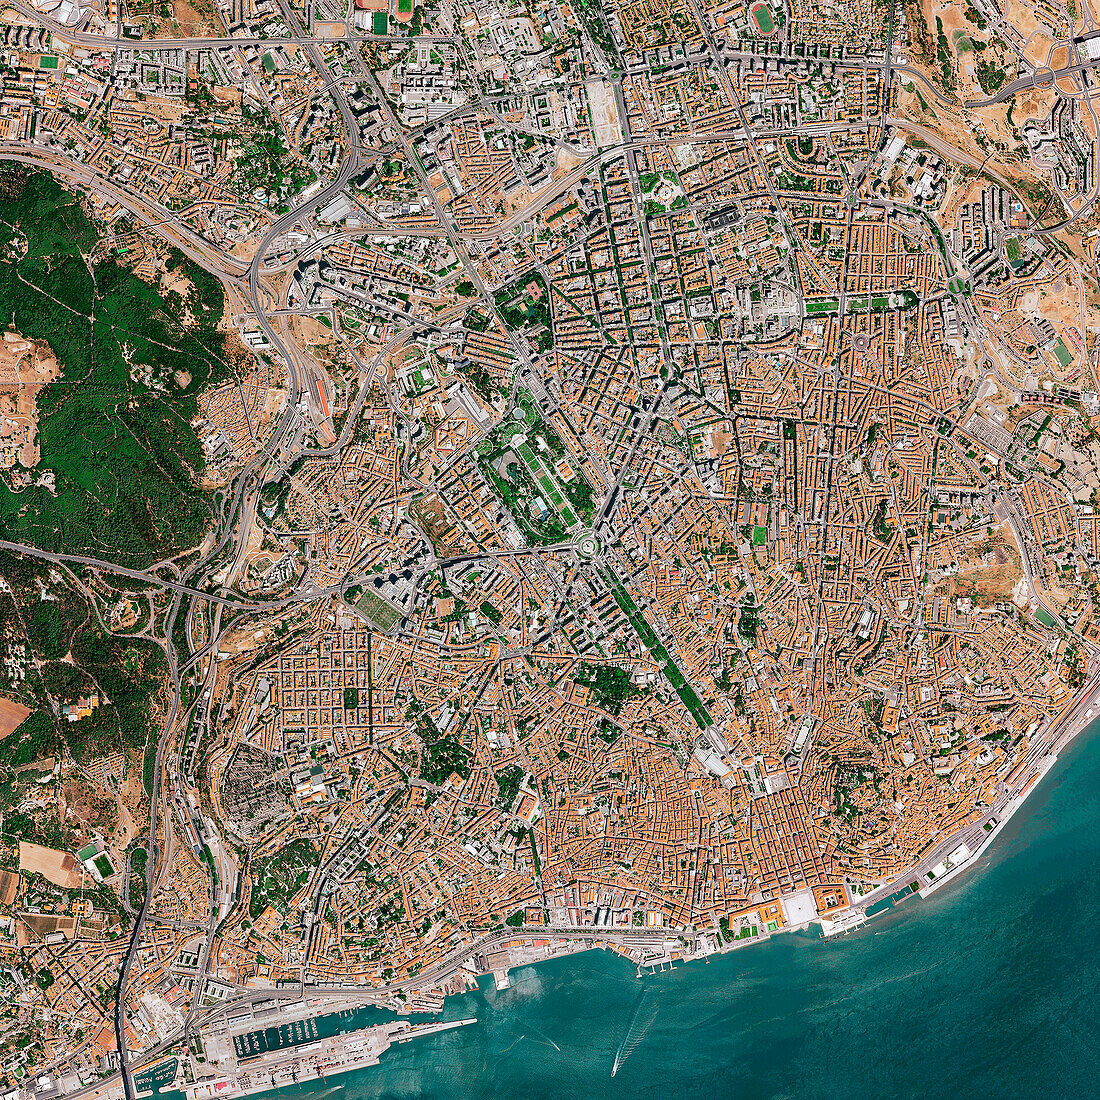 Lisbon, Portugal, satellite image